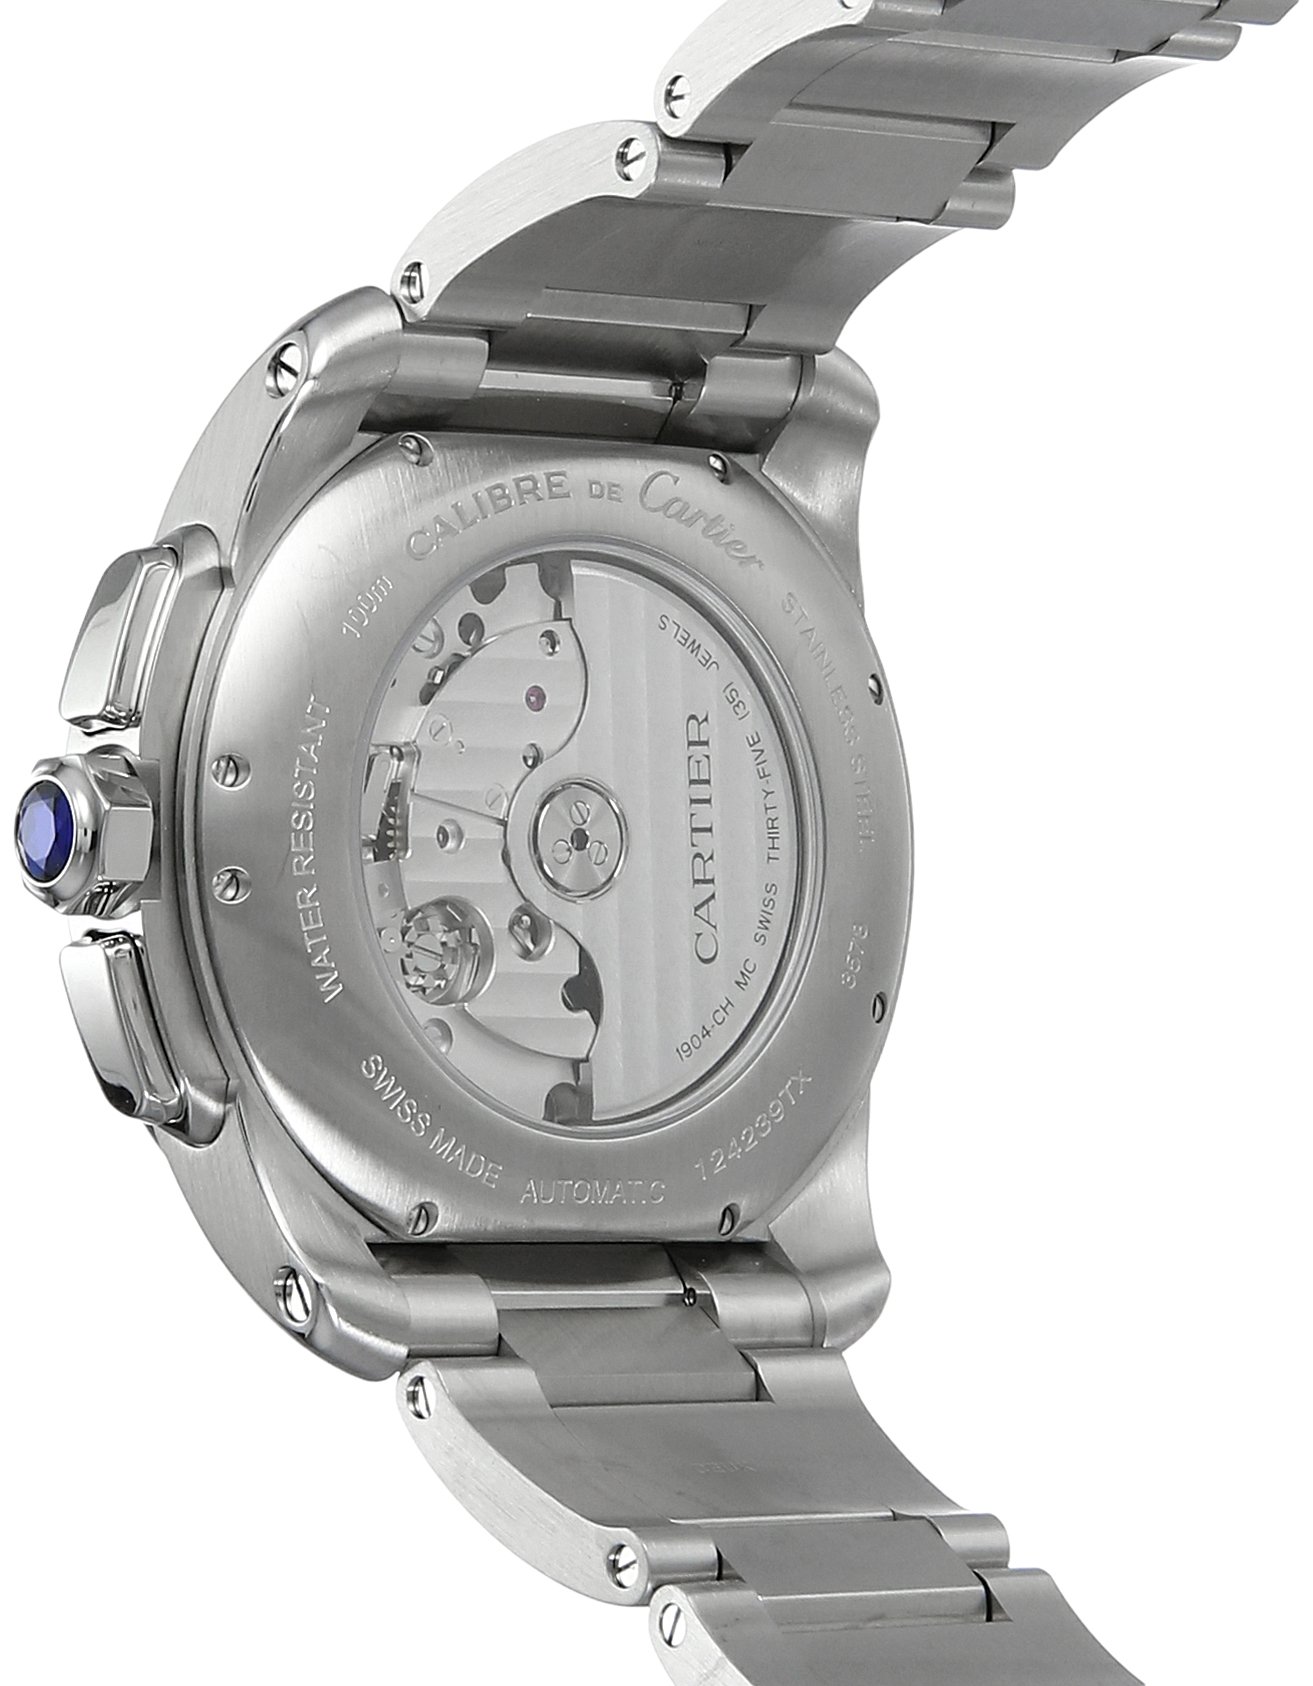 Cartier Men's W7100061 Analog Display Swiss Automatic Silver Watch